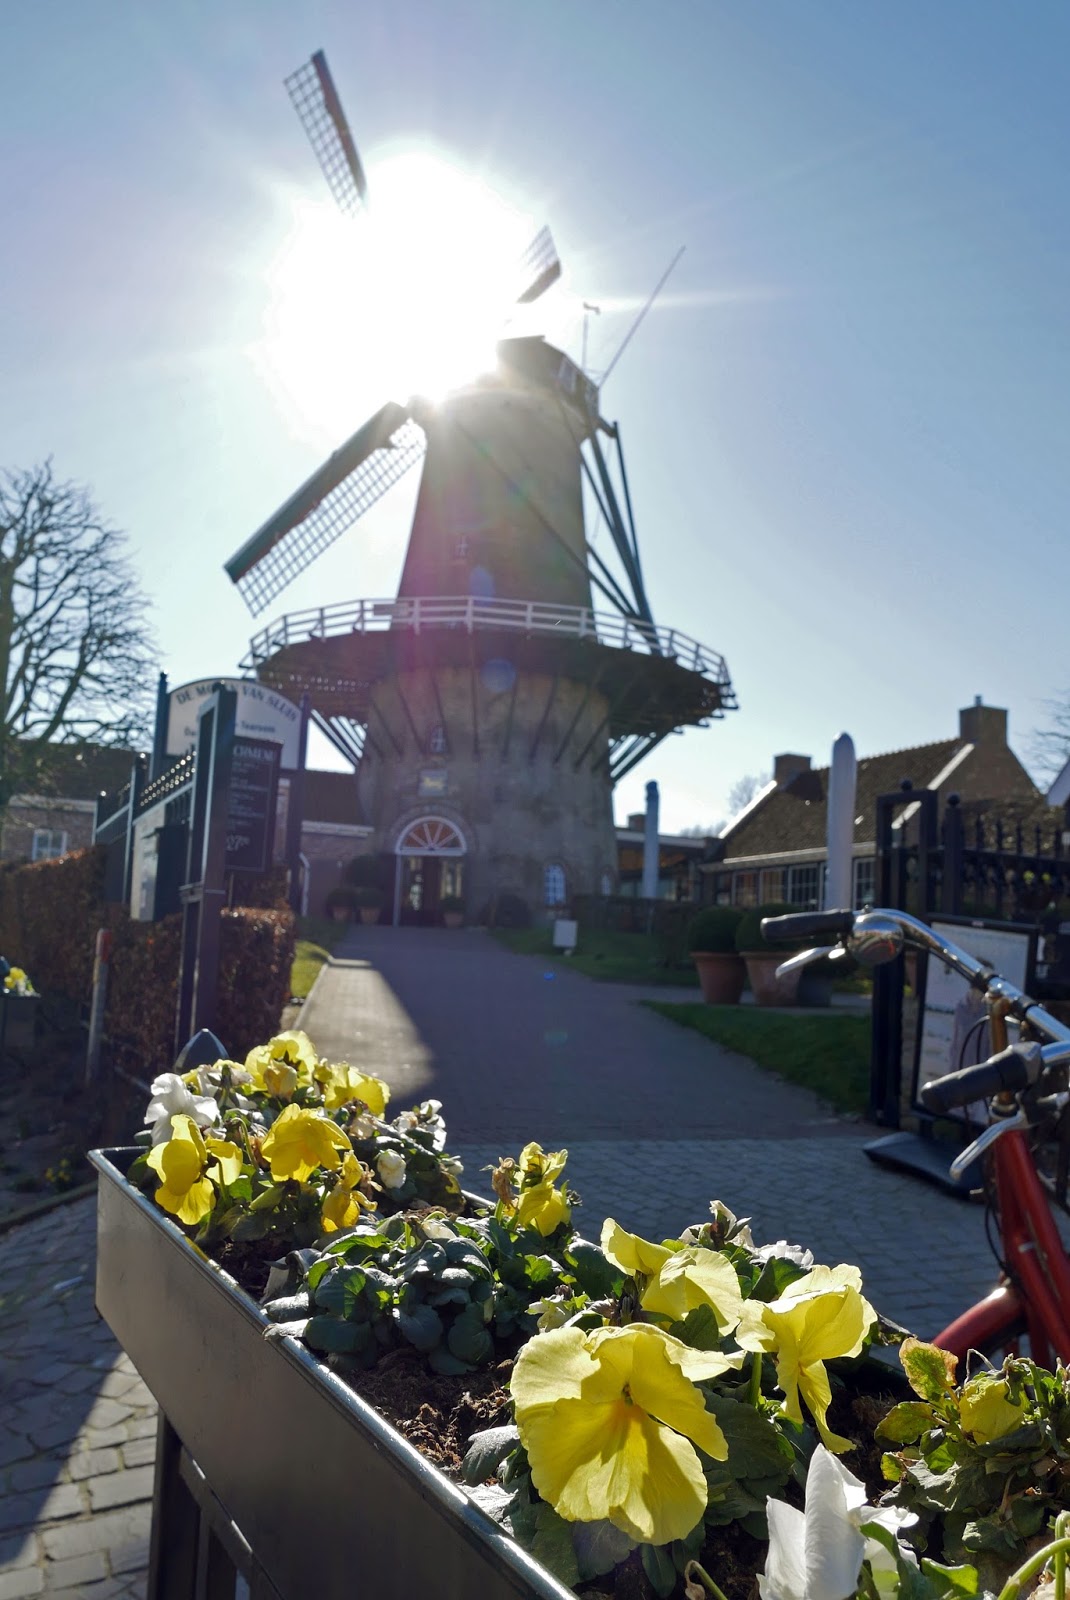 Windmill in Sluis, The Netherlands